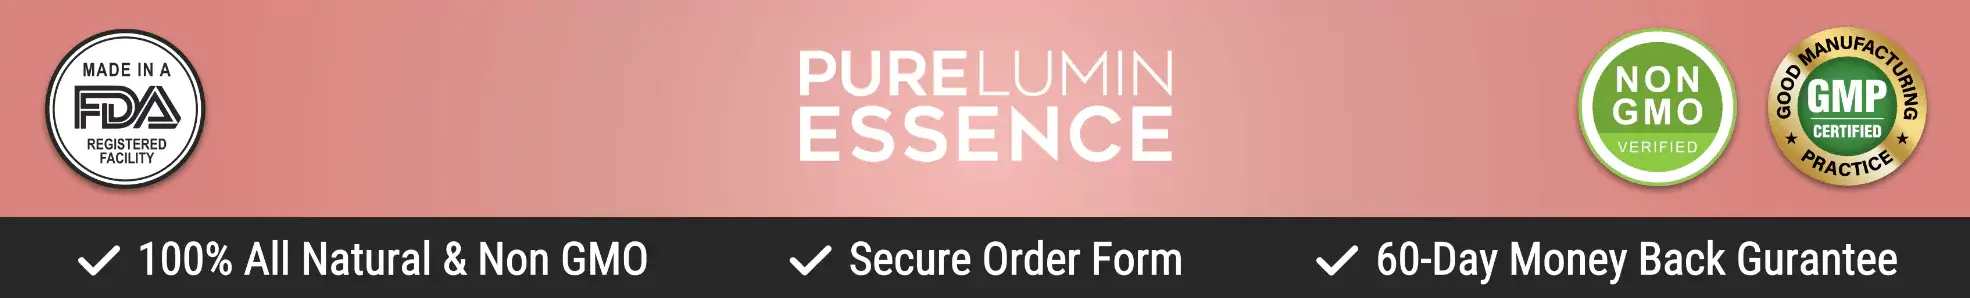 purelumin essence banner